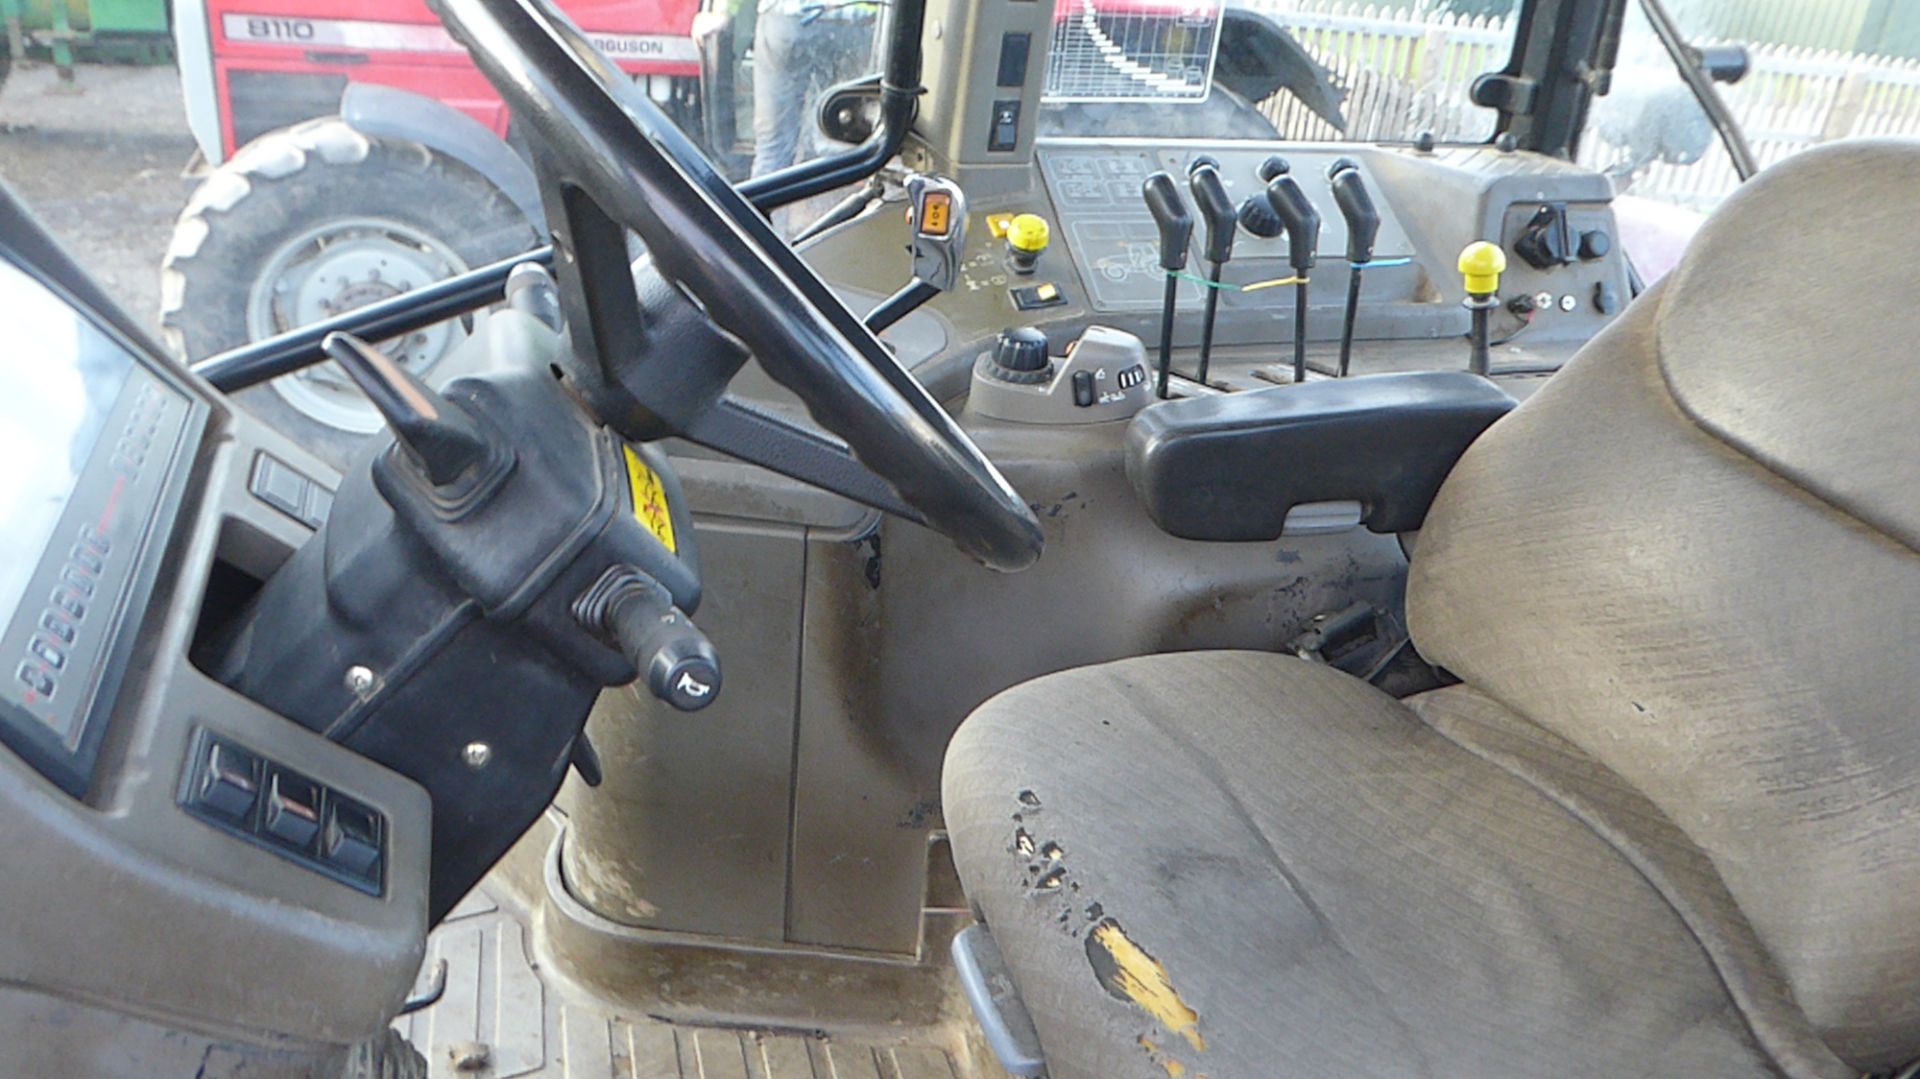 Case MXM155 tractor,YN54 JOV, 9250 hours, 4 spool valves - Image 2 of 7